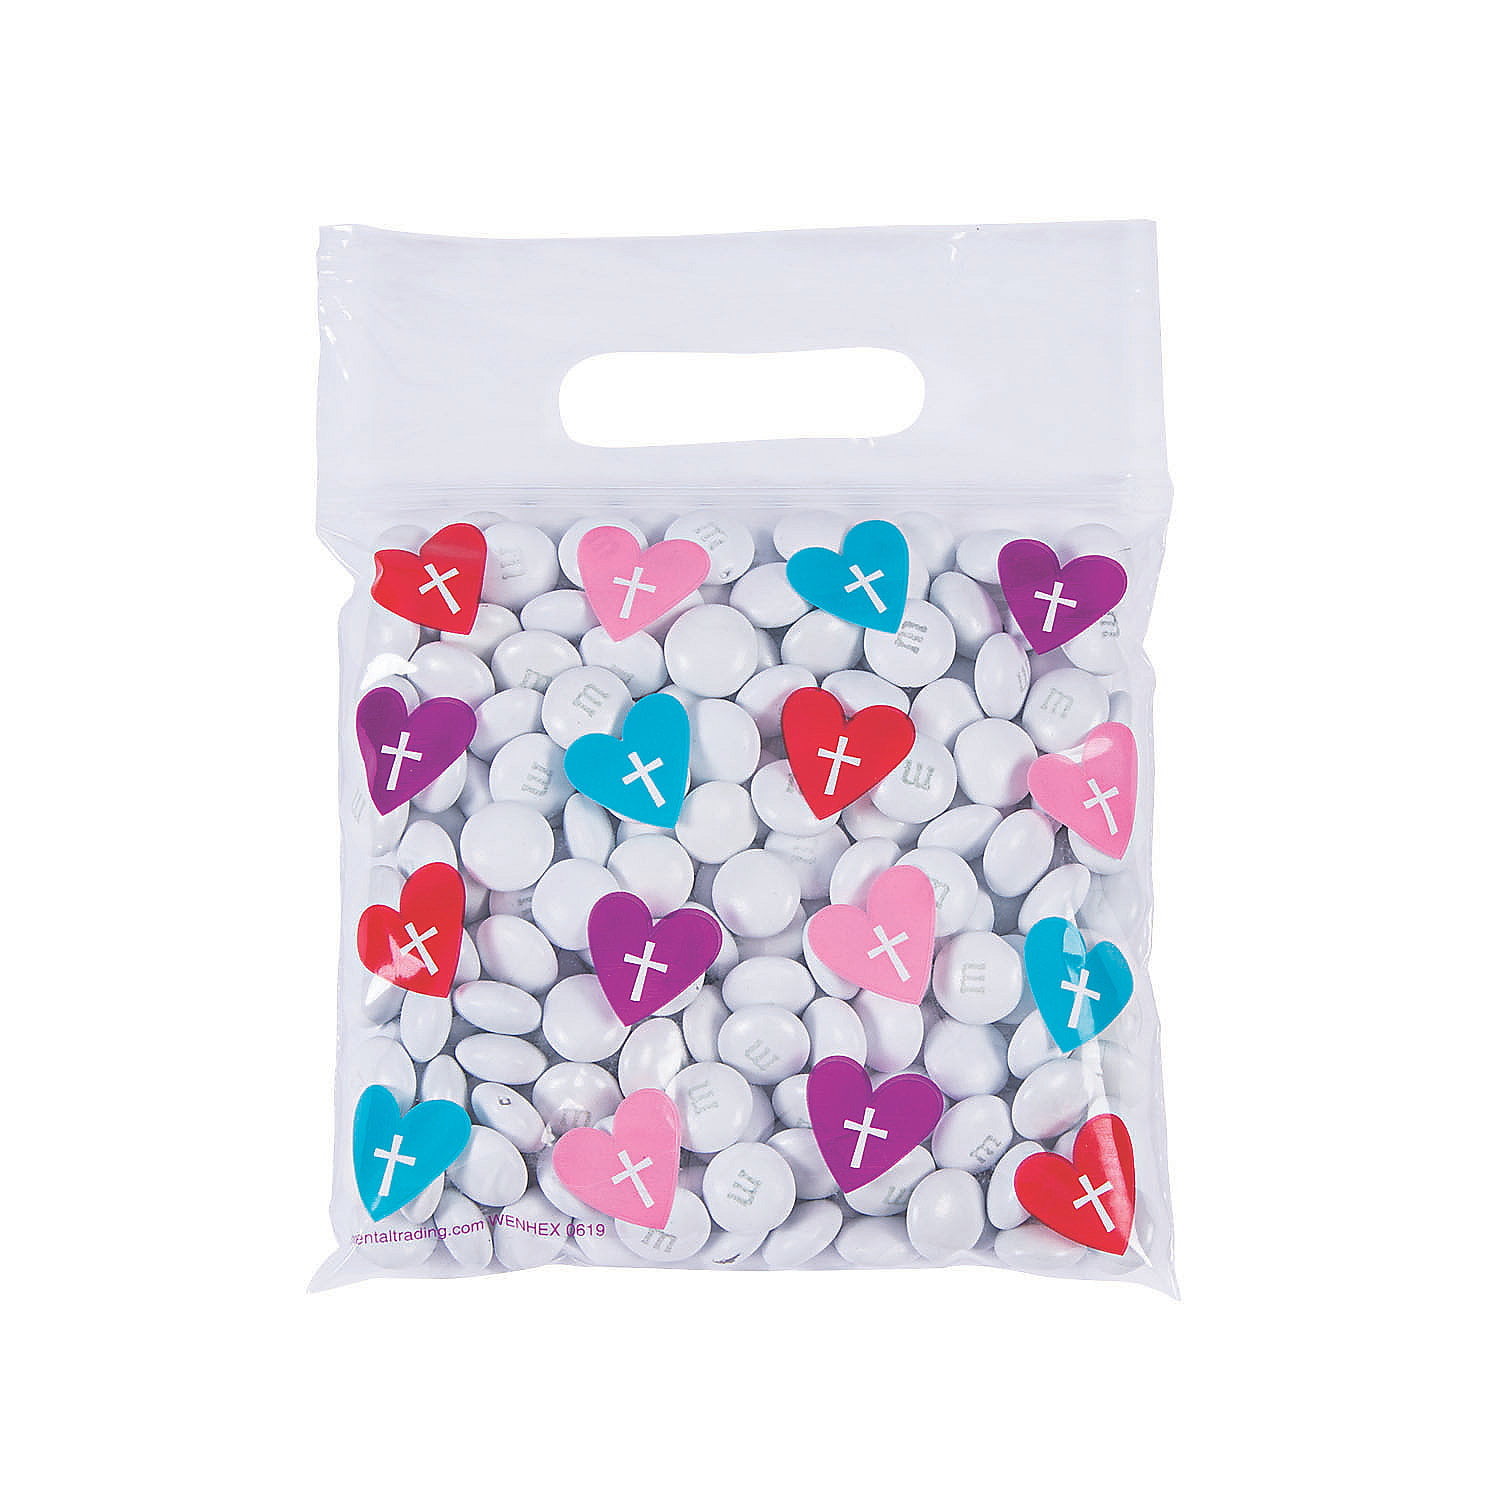 White with Hearts Meri Meri Glassine Heart Treat Bags Pack of 24 